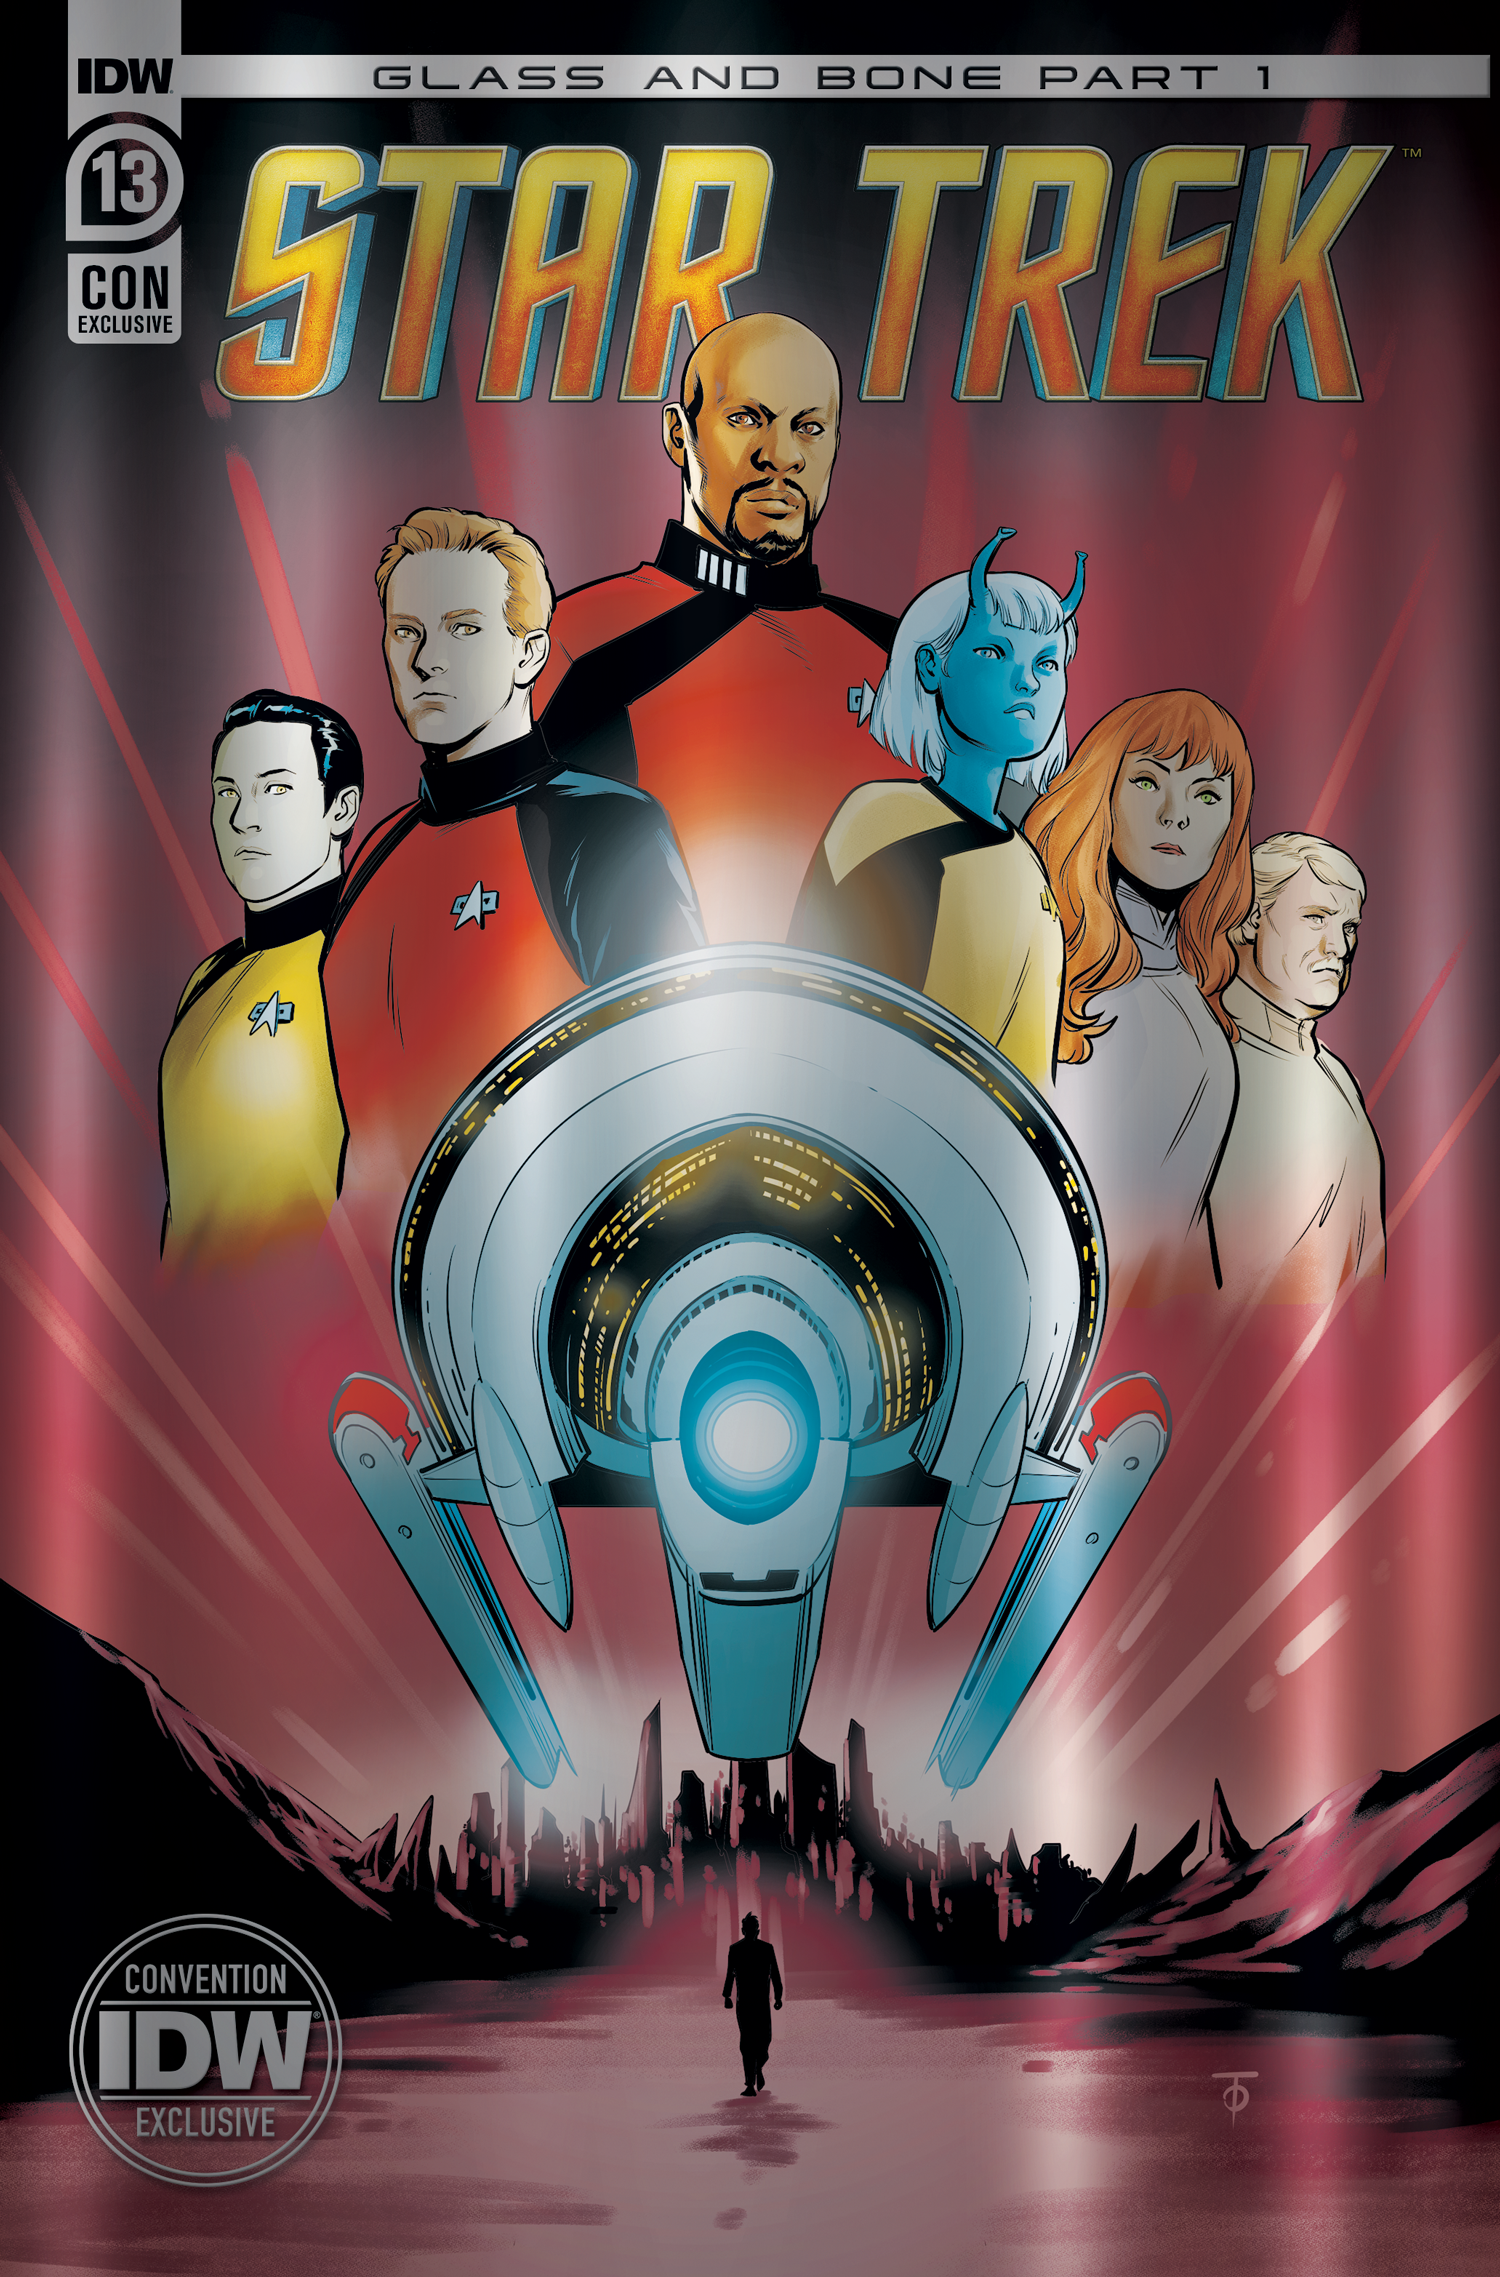 Star Trek #13 Convention Exclusive Foil Cover